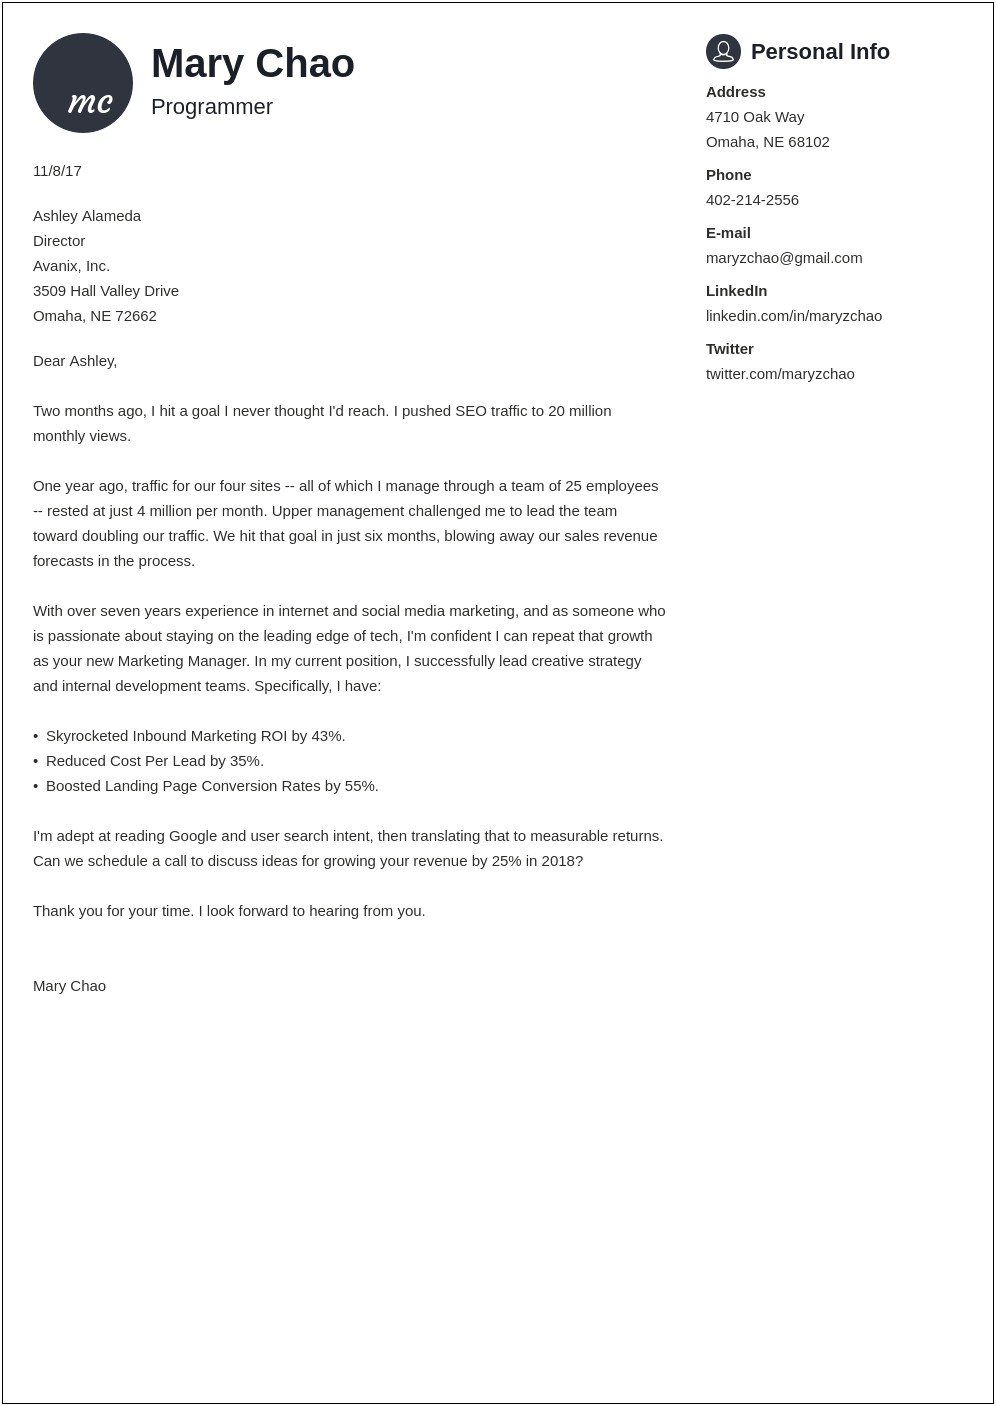 Northrop Grumman Job Application Resume Cover Letter